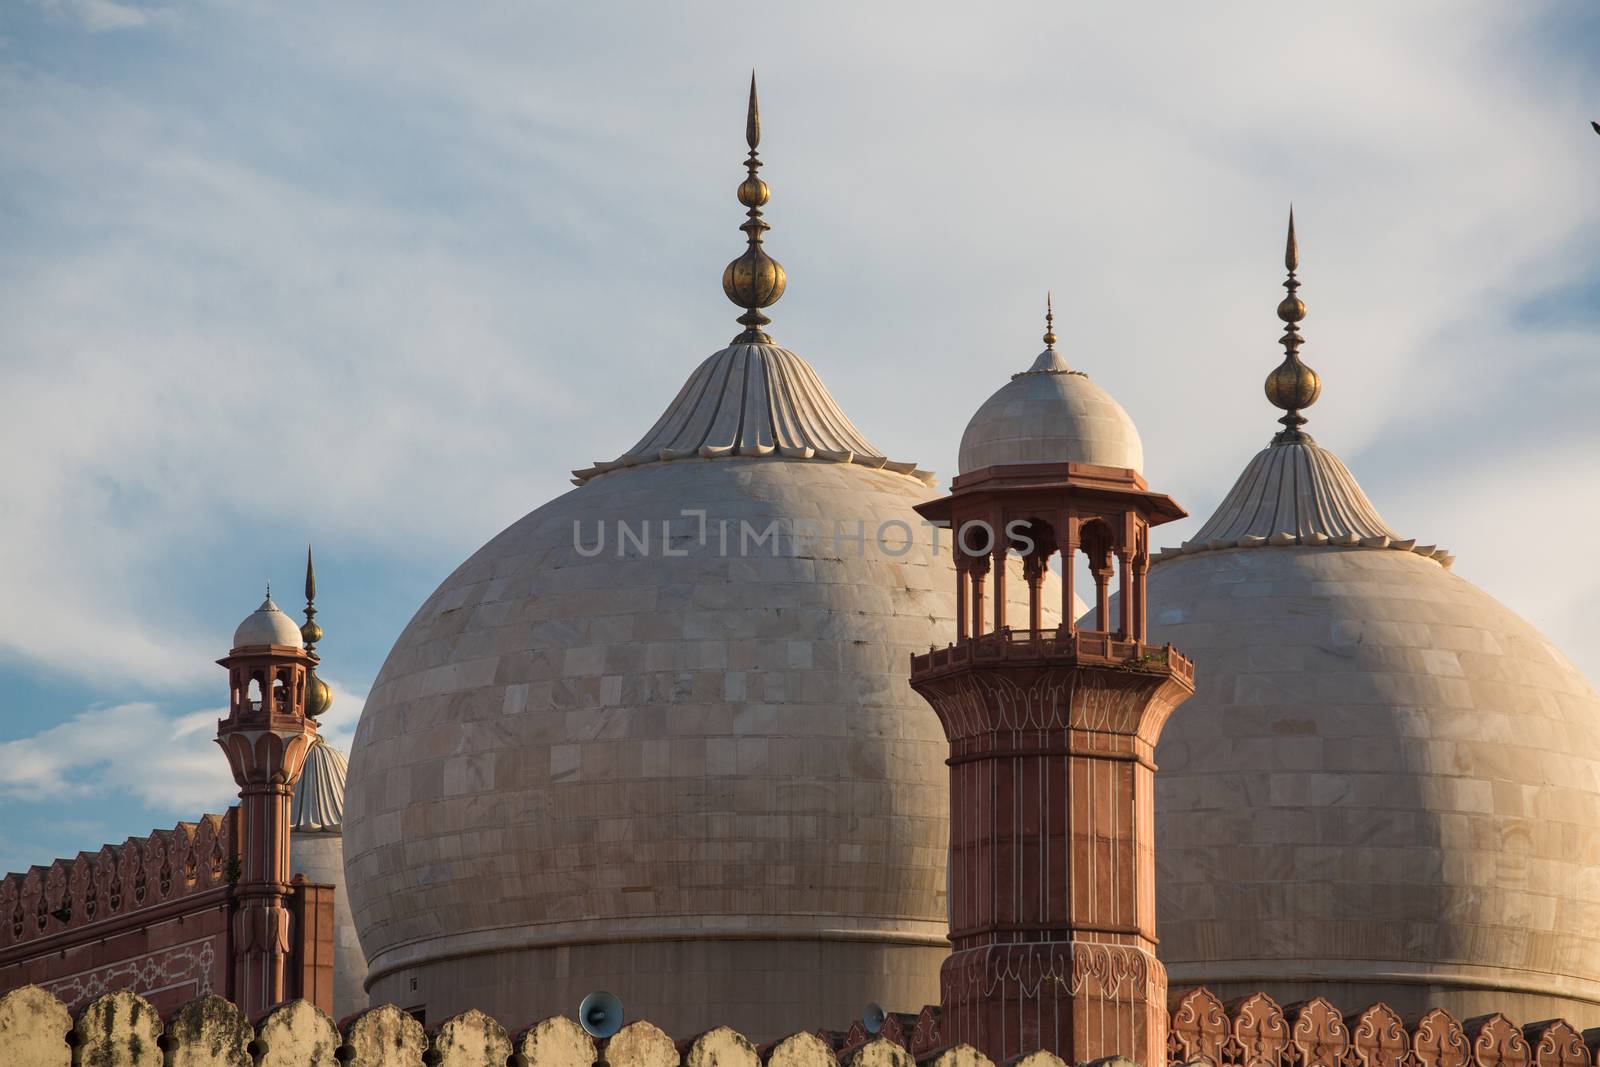 The Emperor's Mosque - Badshahi Masjid in Lahore, Pakistan Dome  by haiderazim